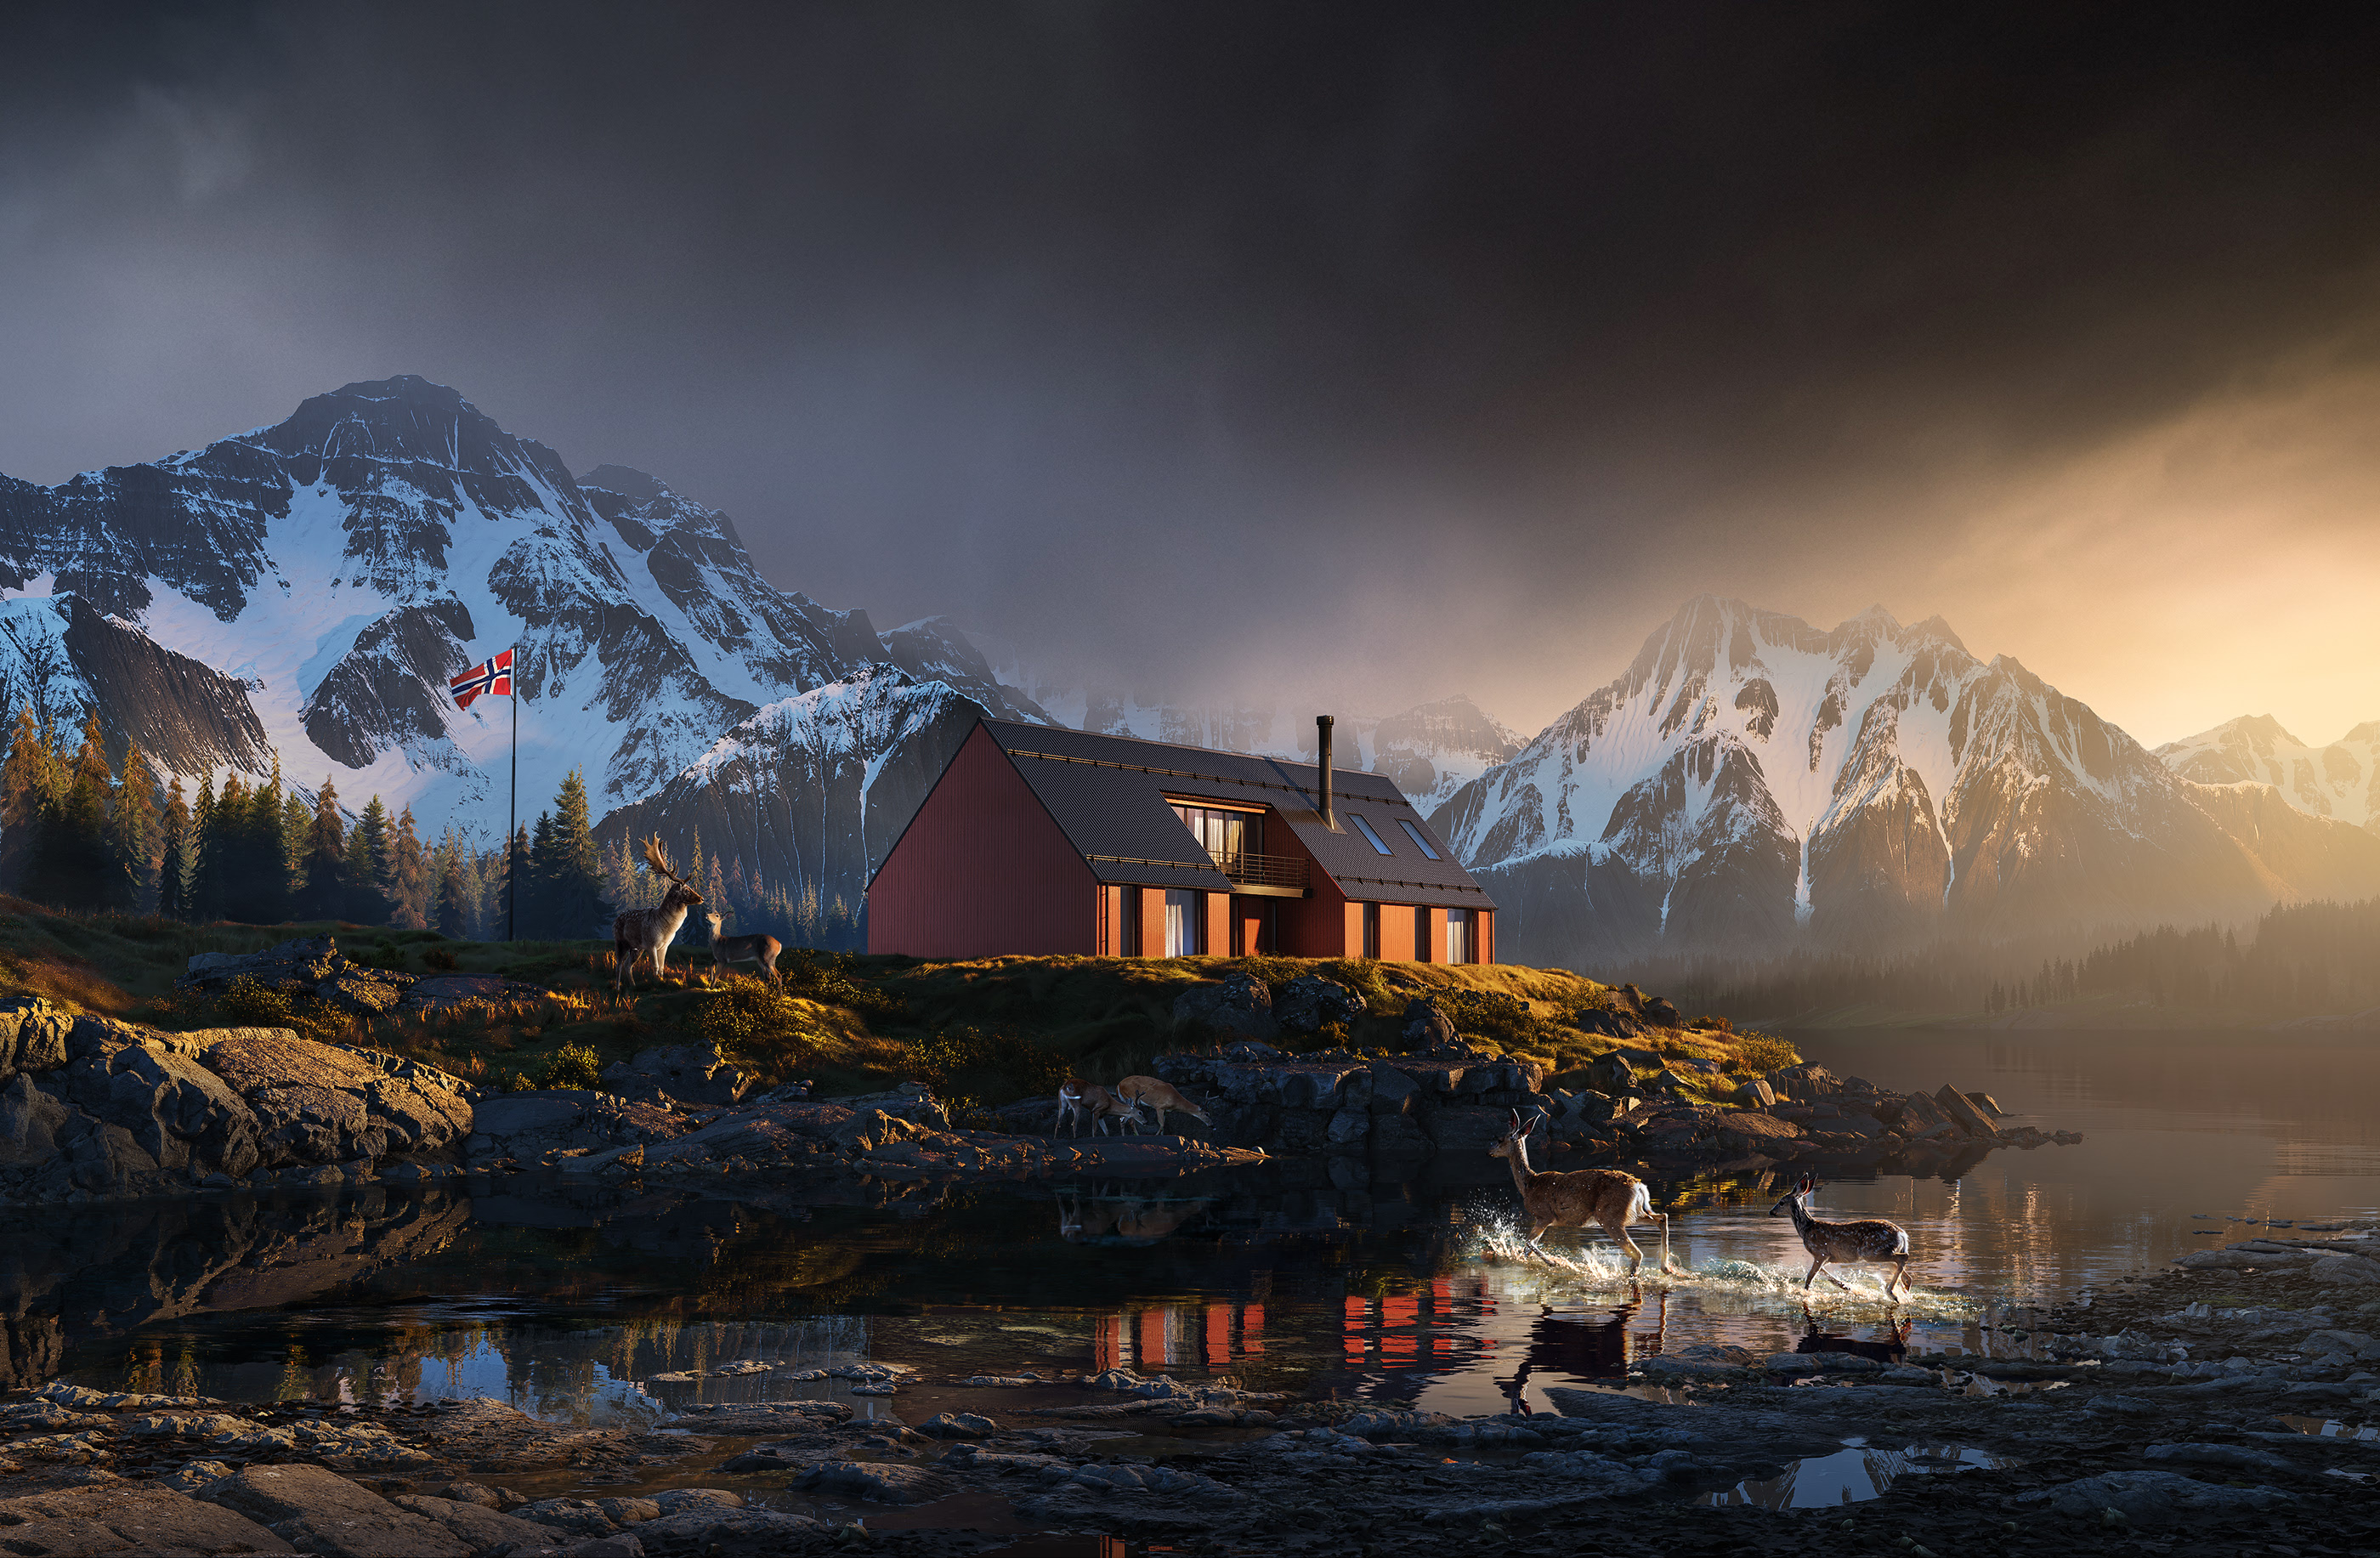 General 2800x1833 Norway Europe digital art artwork landscape mountains snow lake house reflection CGI deer forest